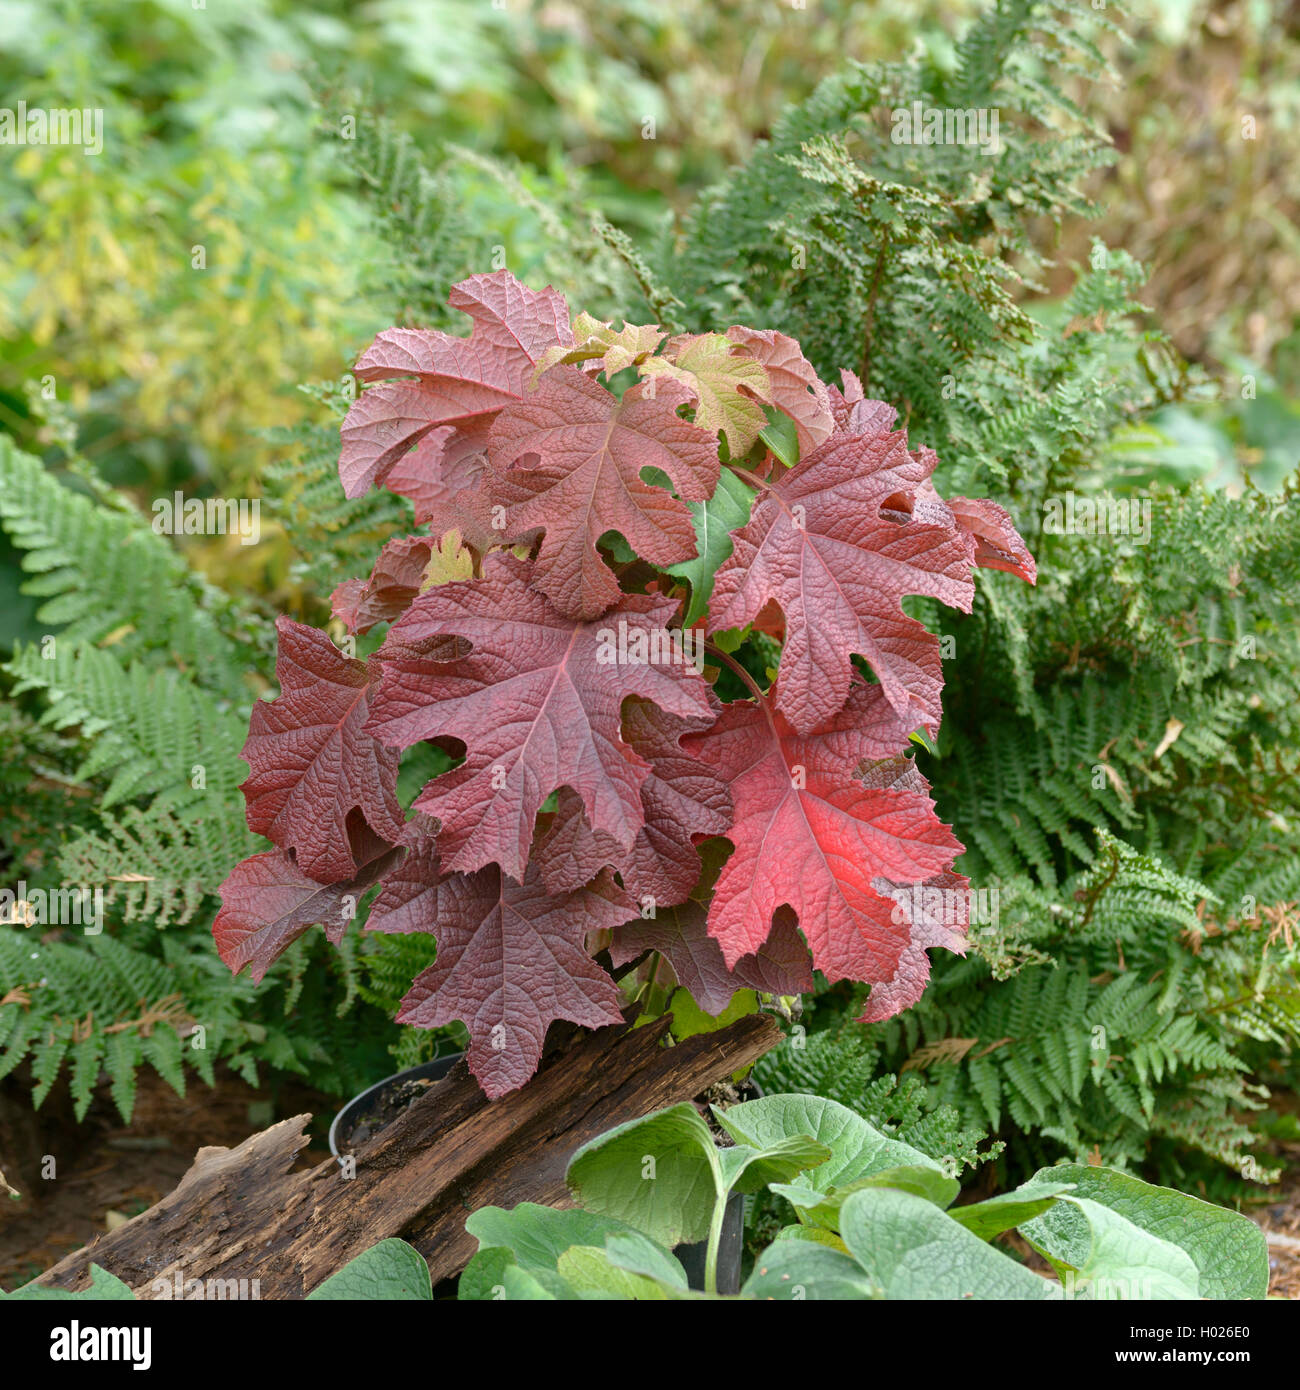 Oak-leaved hydrangea (Hydrangea quercifolia 'Ruby Slippers', Hydrangea quercifolia Ruby Slippers), cultivar Ruby Slippers, Germany Stock Photo